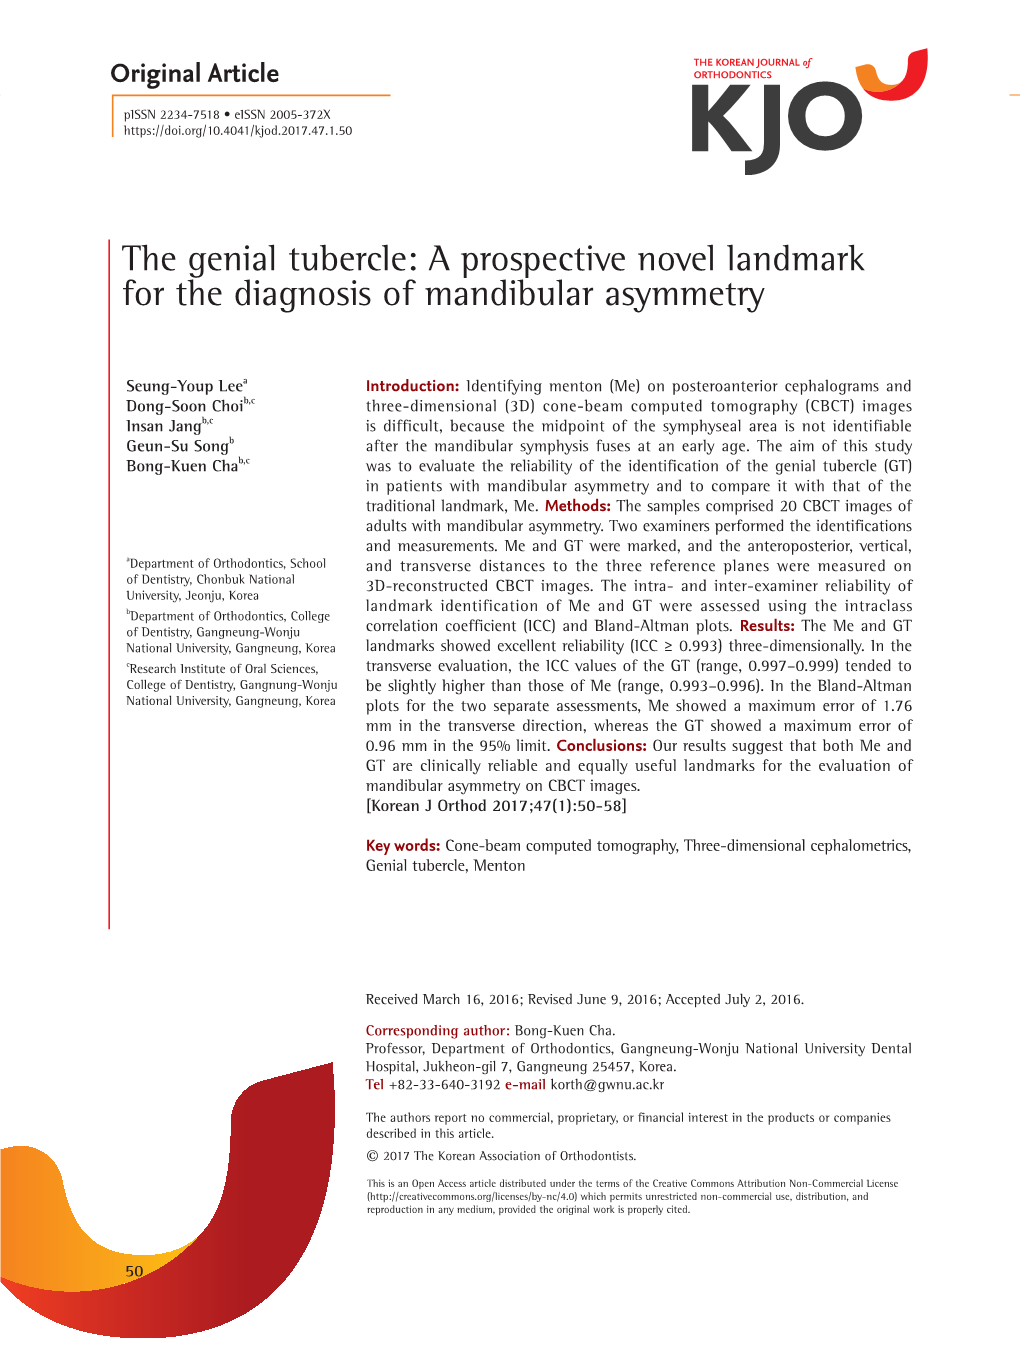 The Genial Tubercle: a Prospective Novel Landmark for the Diagnosis of Mandibular Asymmetry